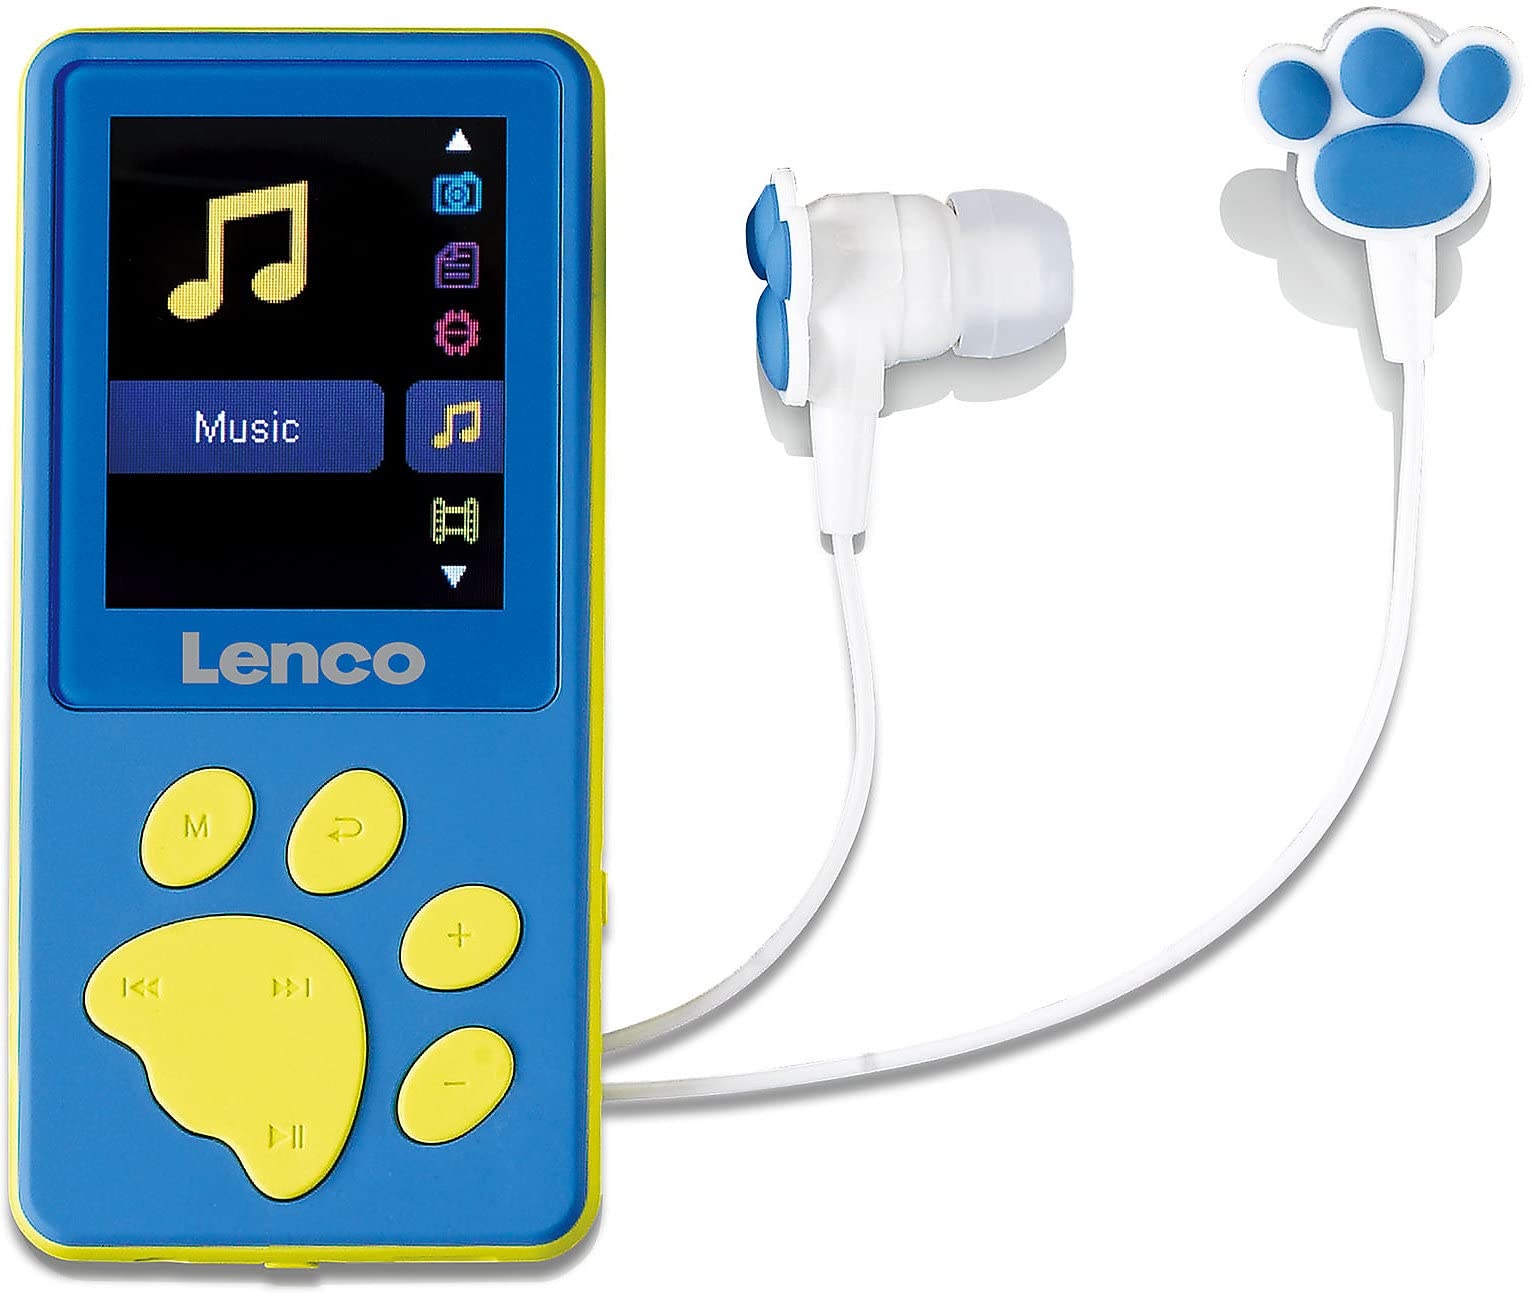 Bild Xemio-560 MP3 Player 8 GB blau